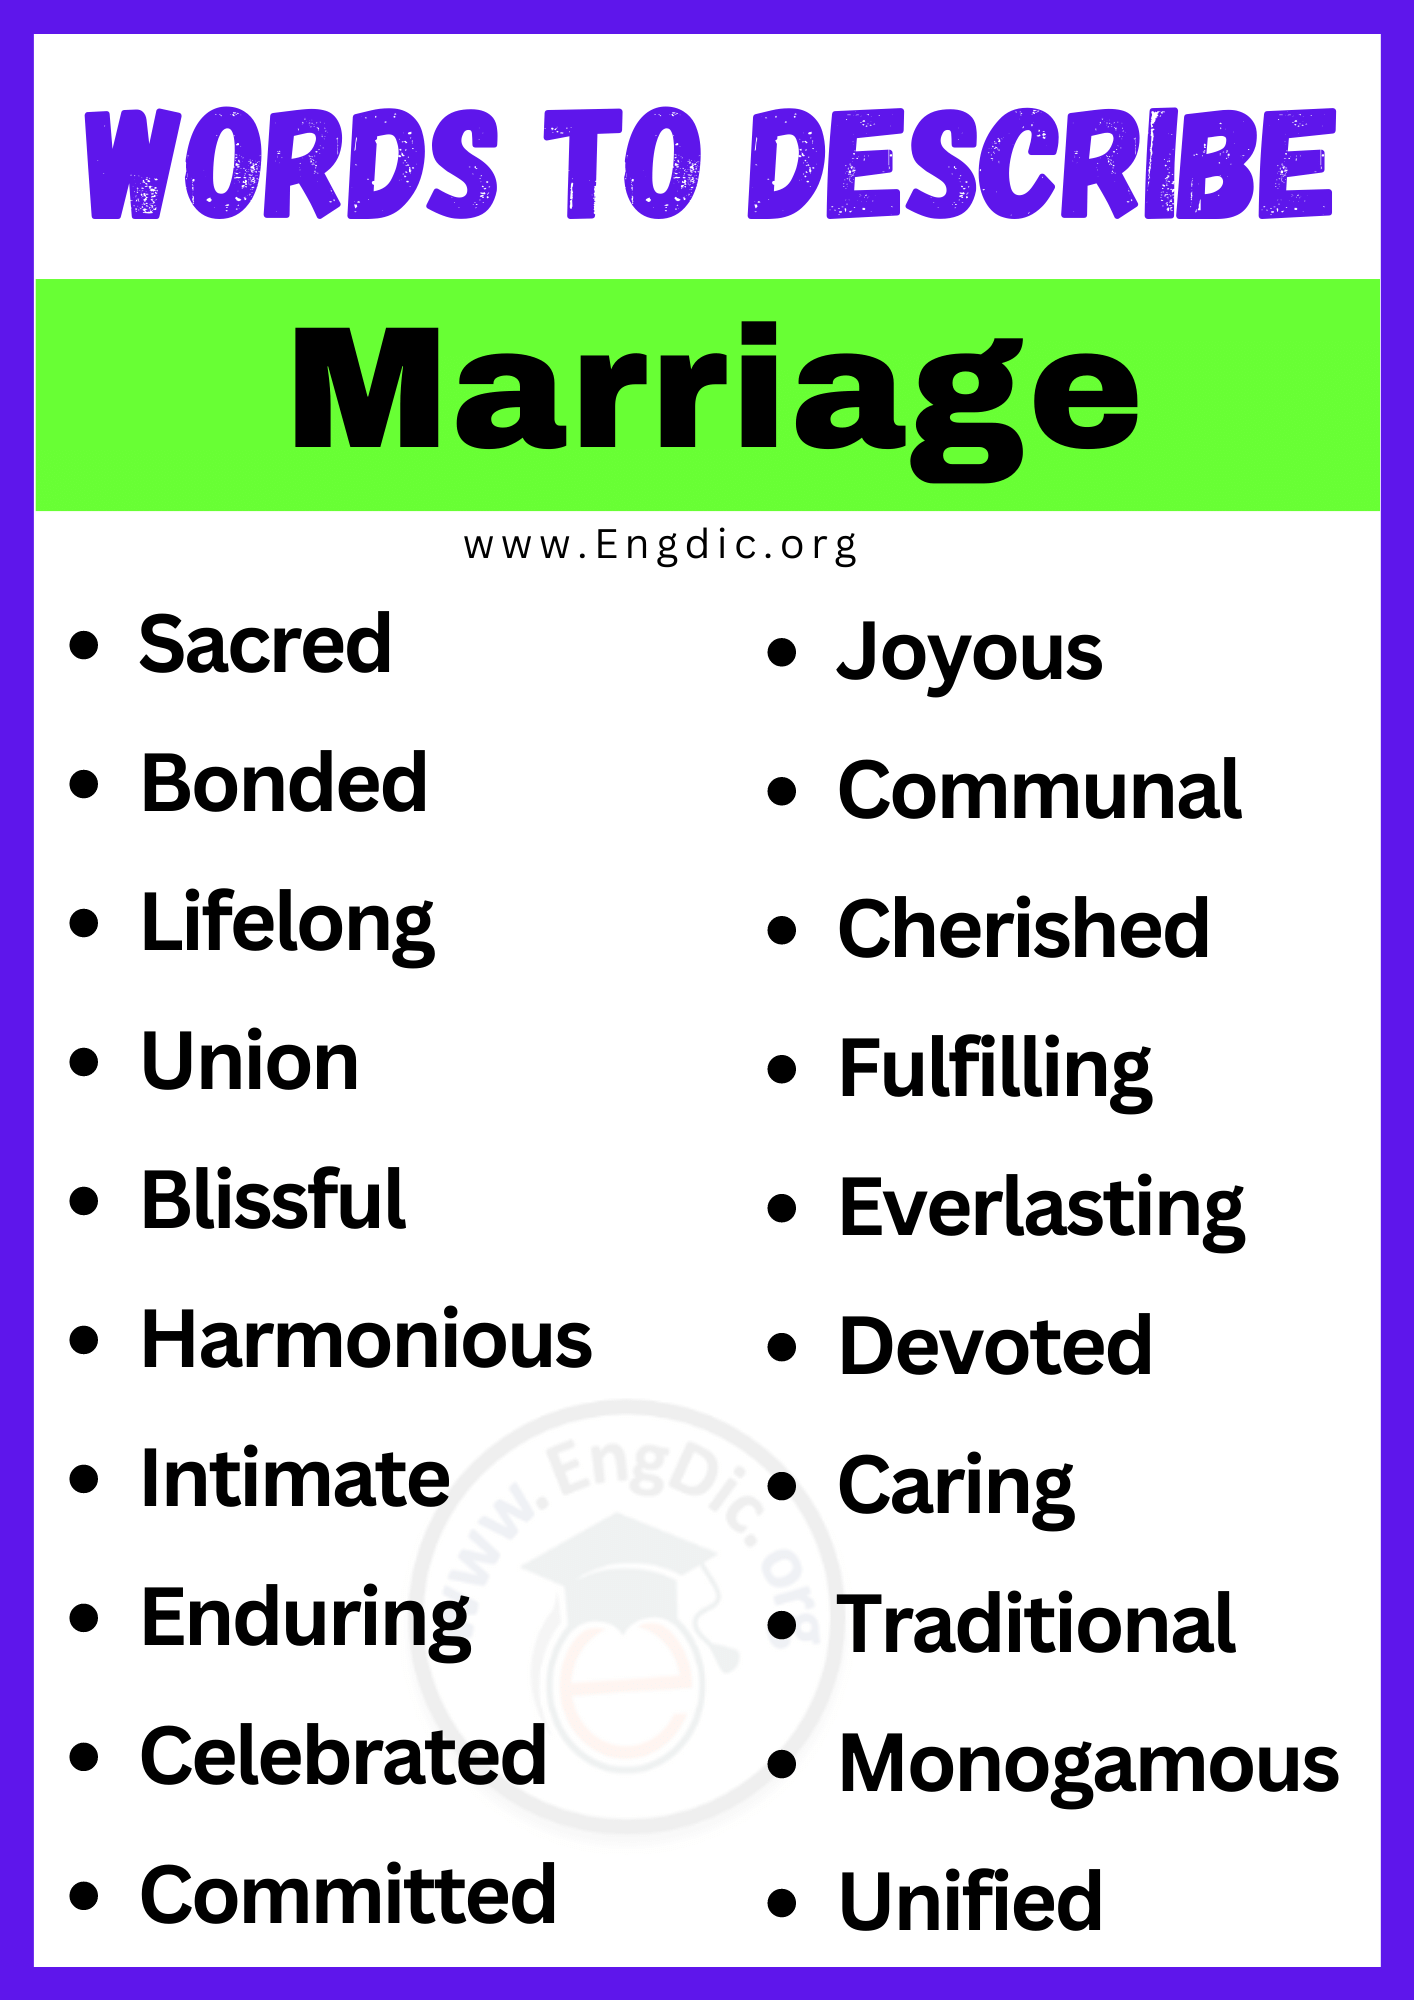 Words to Describe Marriage